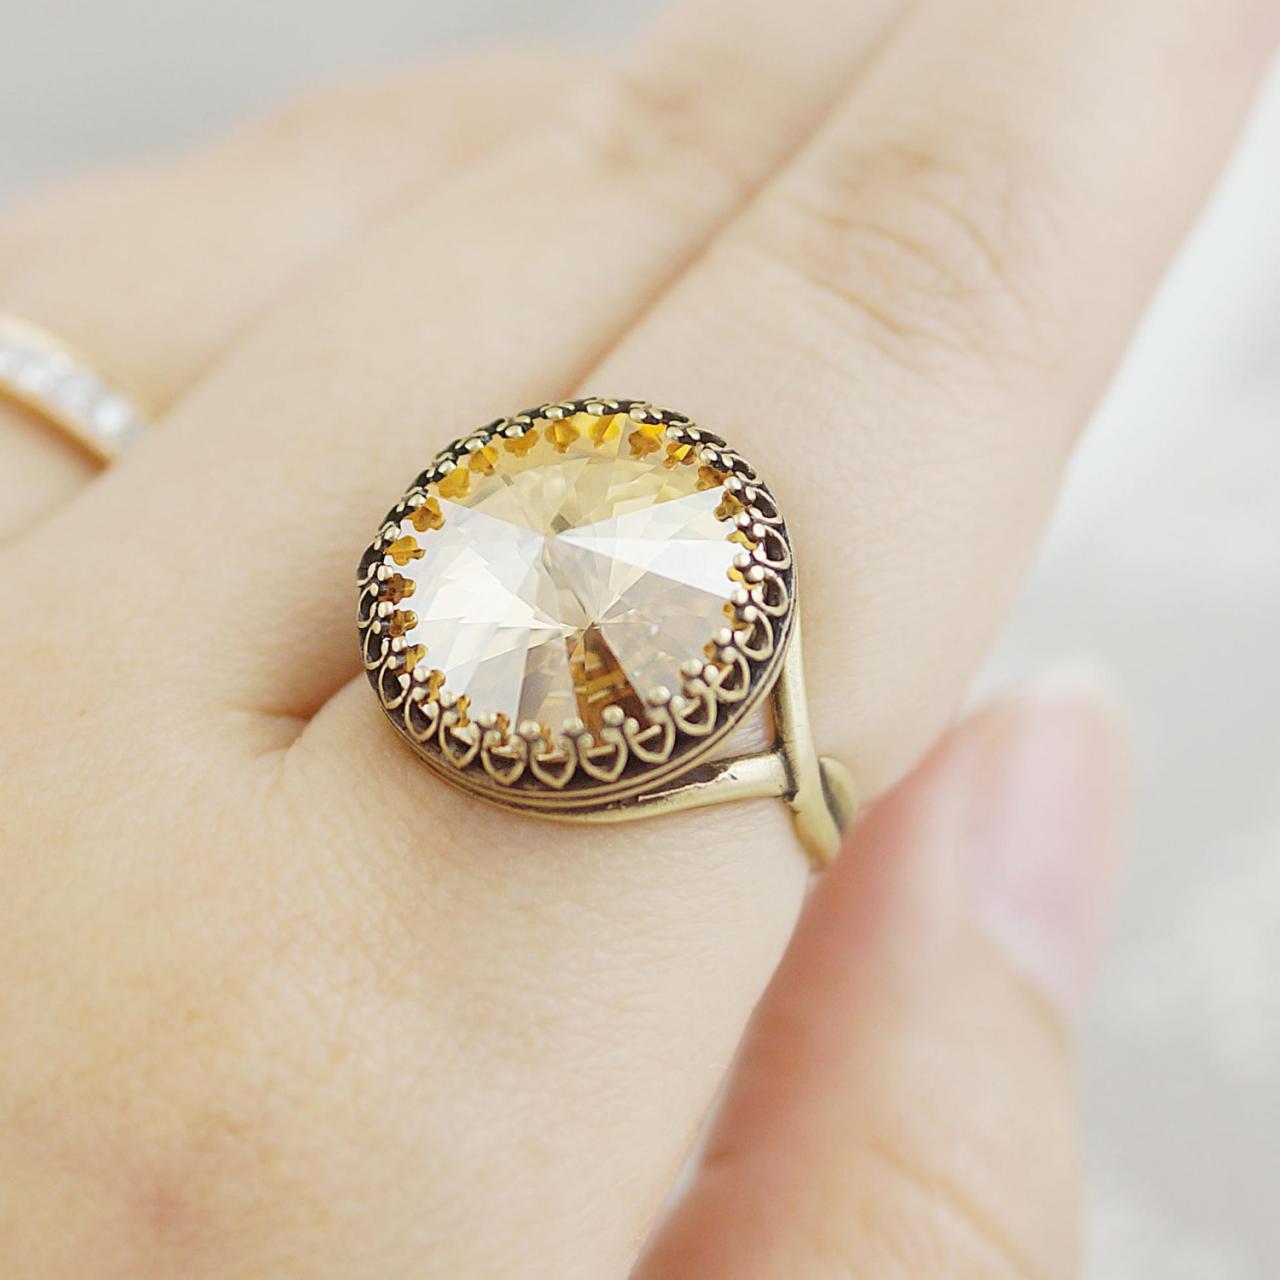 Vintage Style Golden Shadow Swarovski Rivoli Ring Adjustable Ring Best Friend Gift Bridesmaid Gifts Jewelry Vintage Style Ring